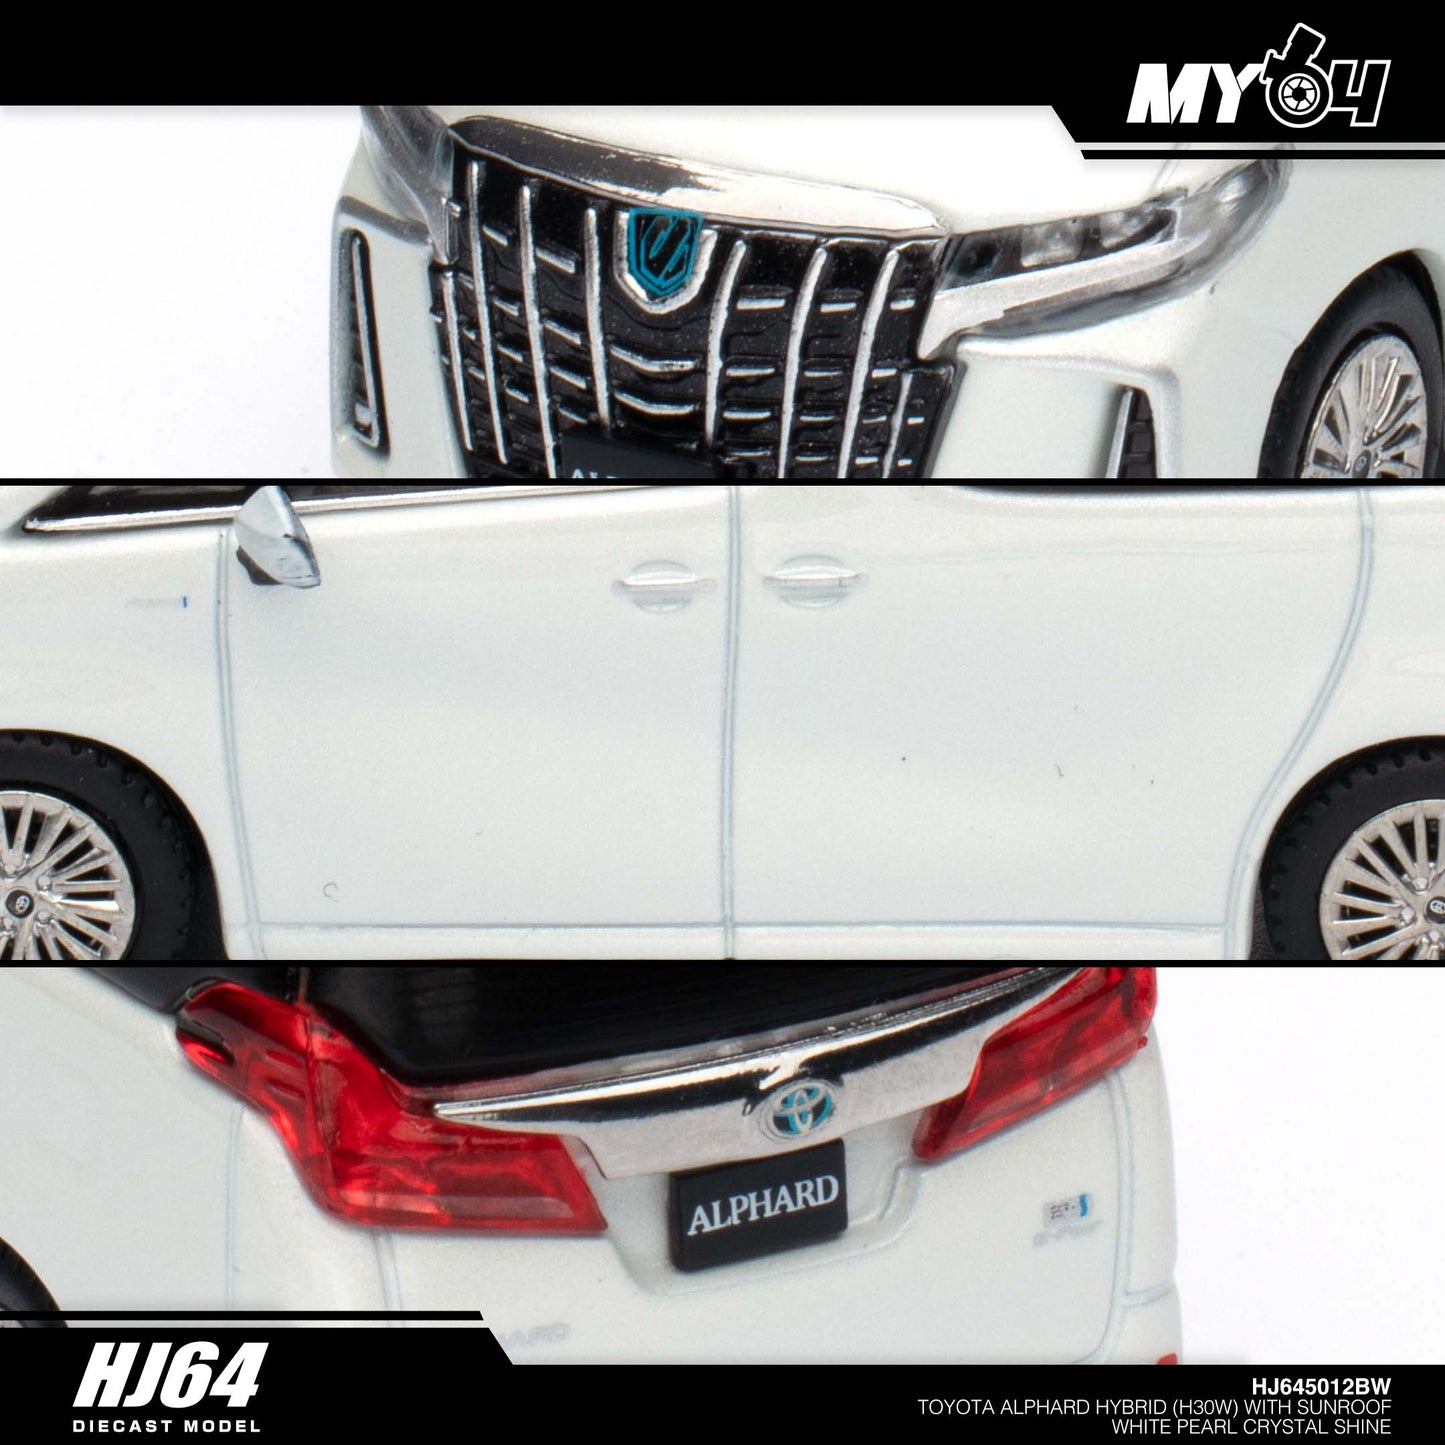 [Hobby Japan] Toyota Alphard Hybrid (H30W) With Sun Roof - White Pearl Crystal Shine